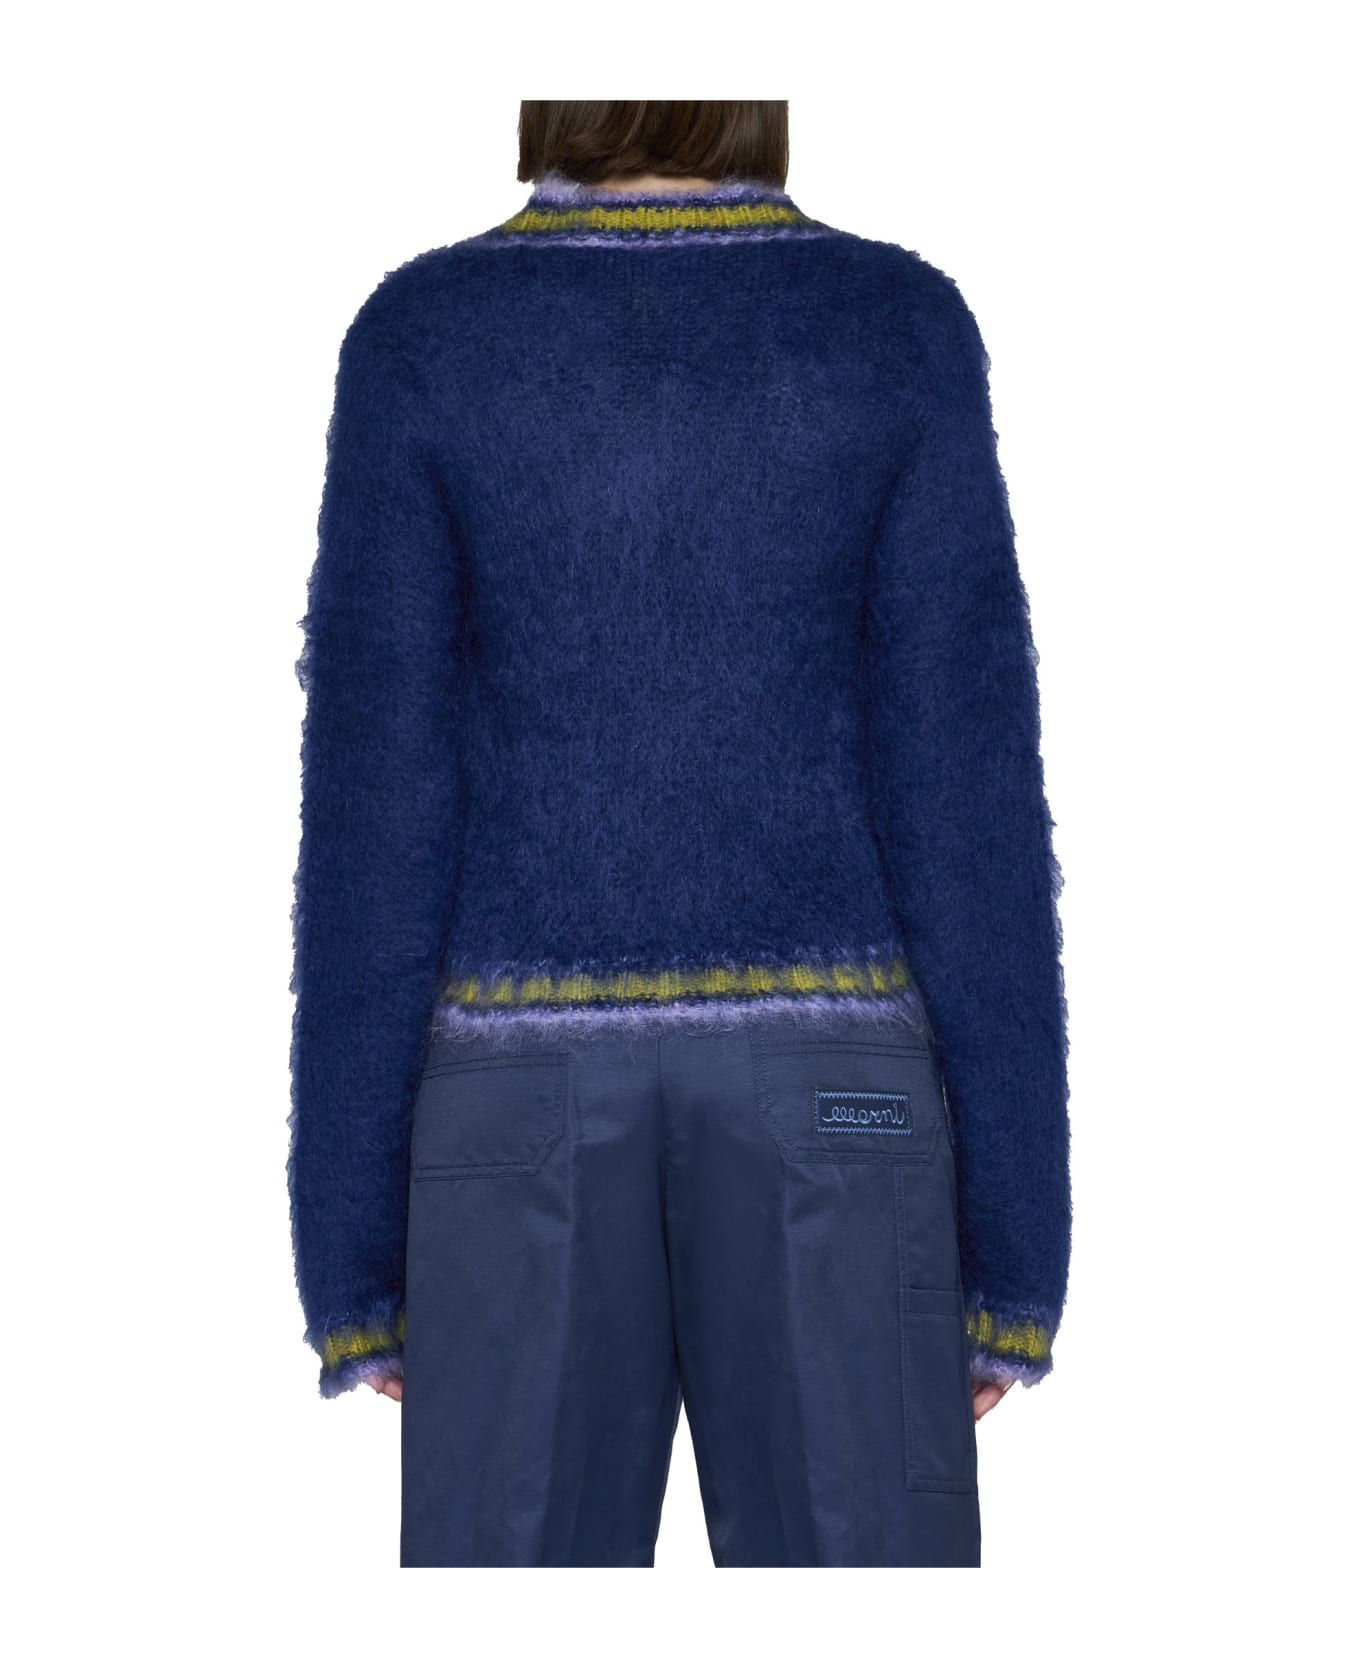 Marni Sweater - Blue